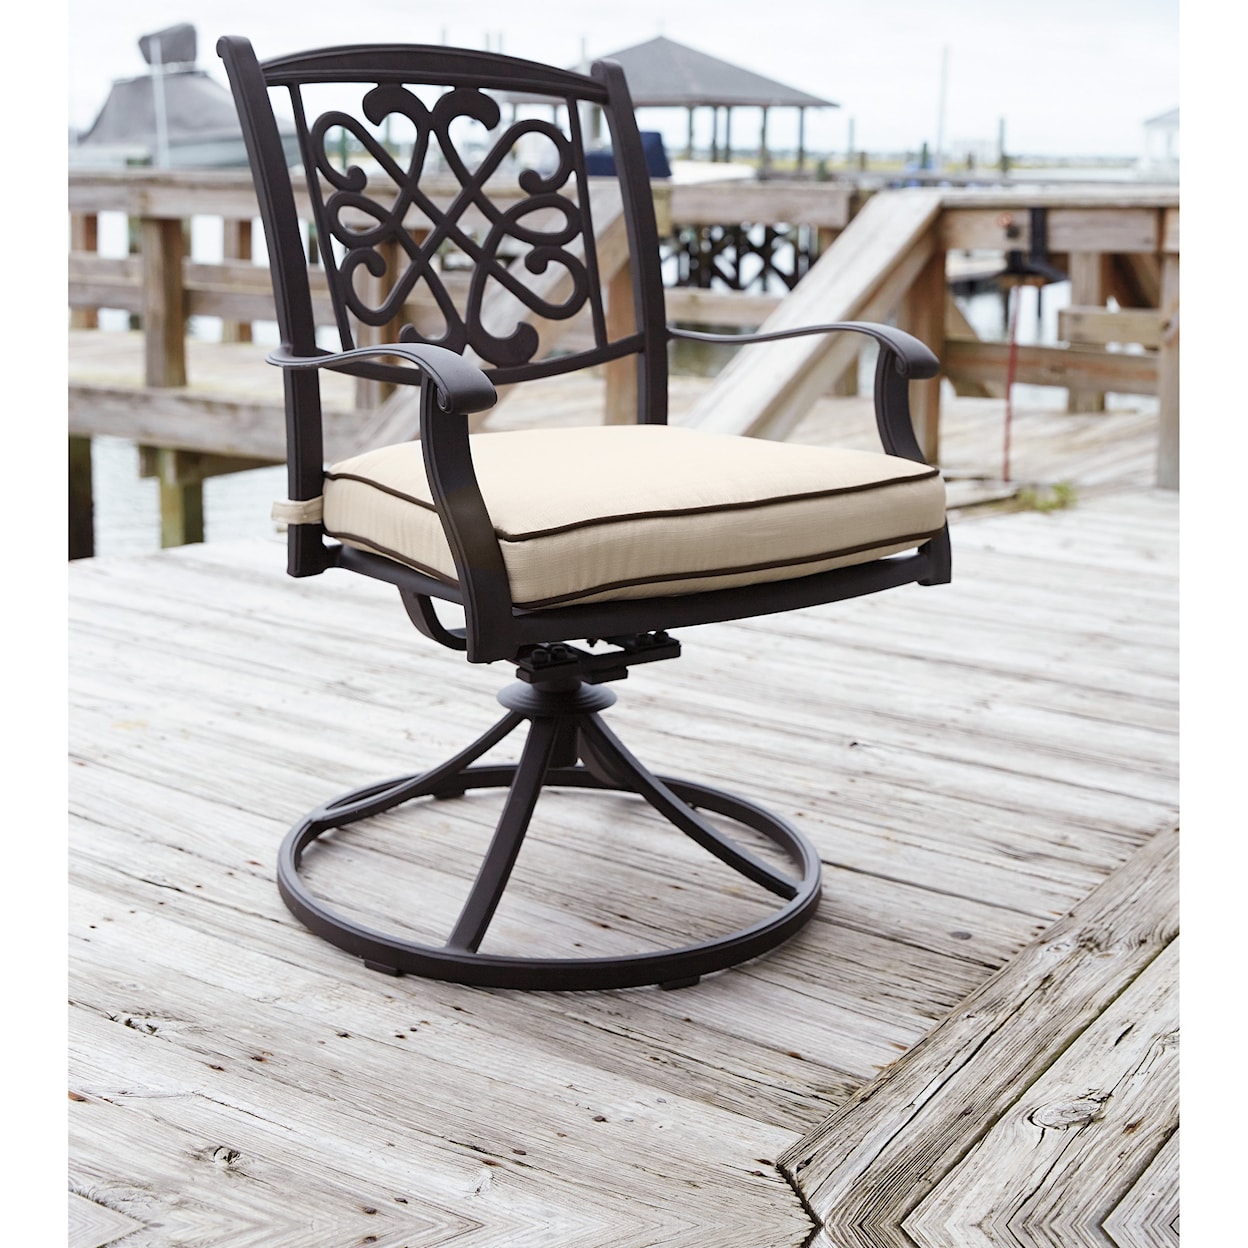 Signature Design by Ashley Burnella Set of 2 Outdoor Swivel Chairs w/ Cushion